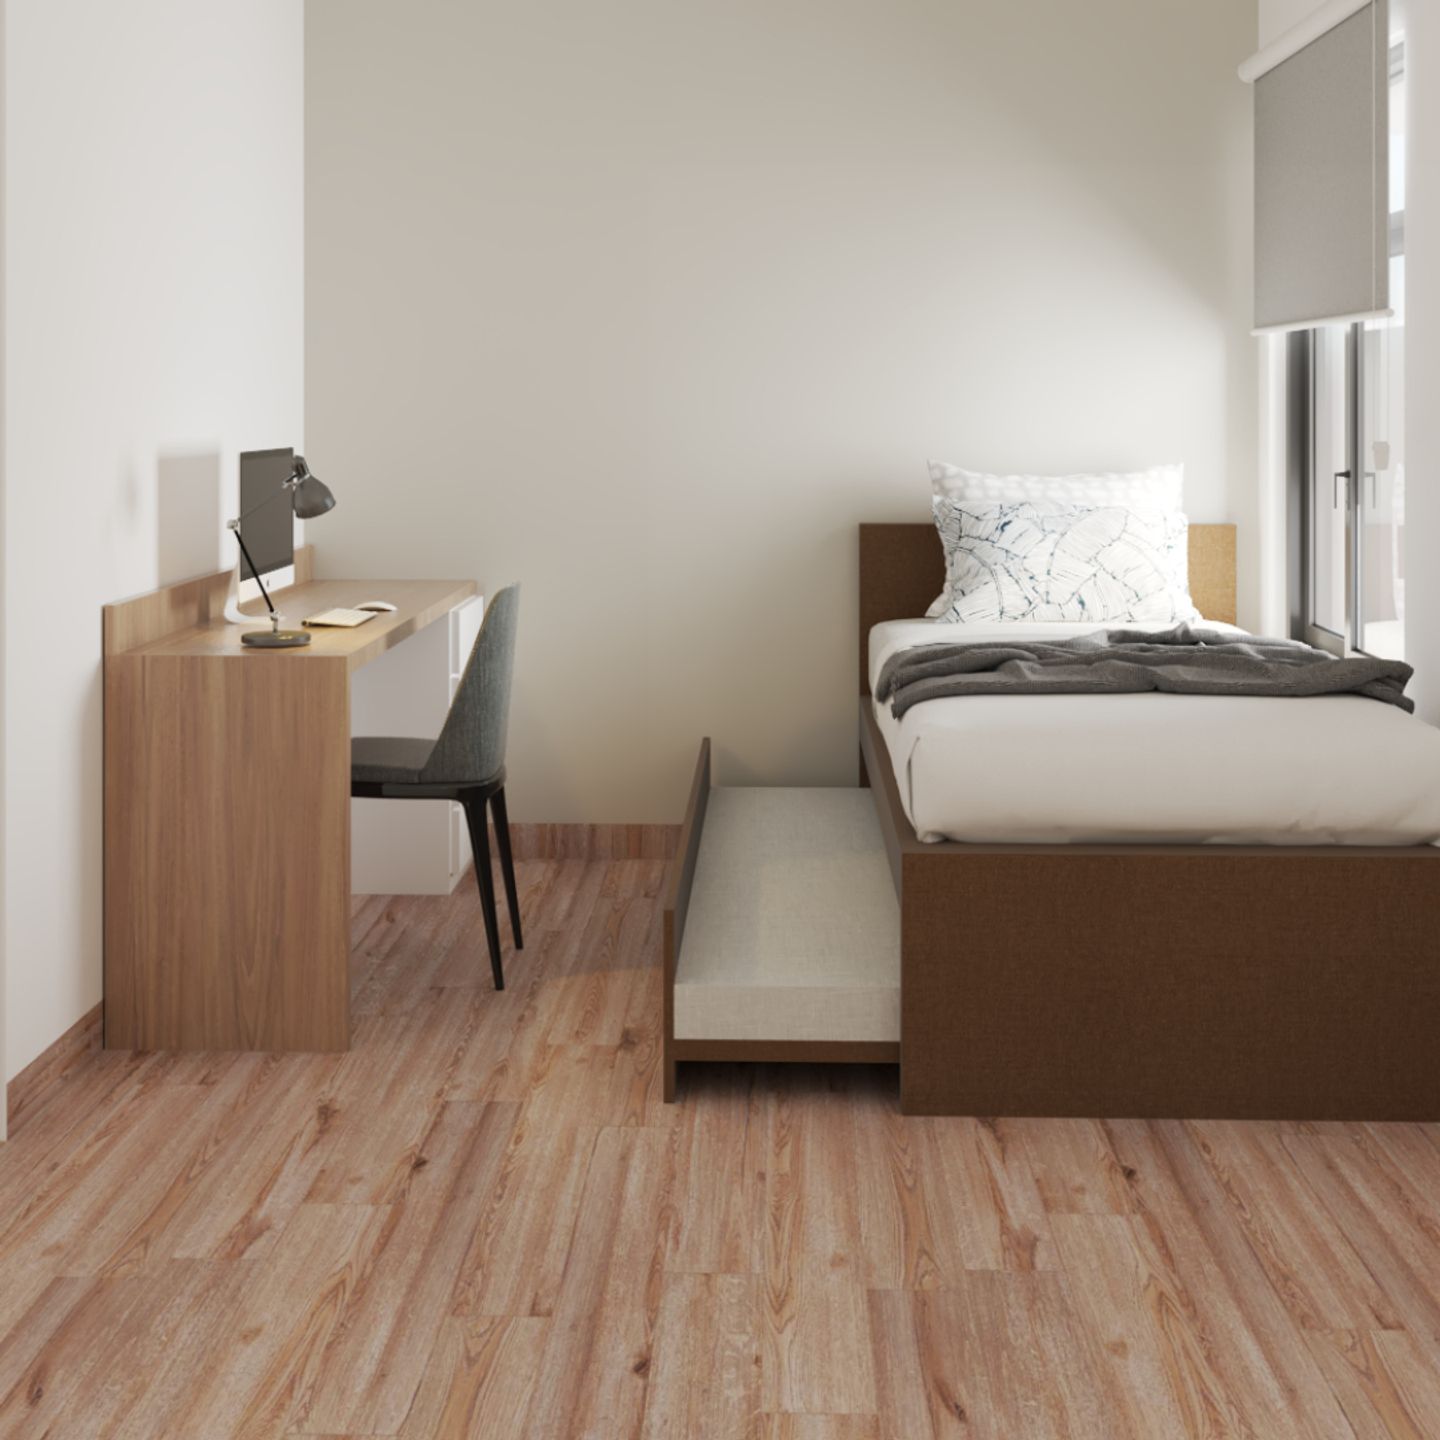 Matte Brown Flooring Design With Rectangular Tiles - Livspace